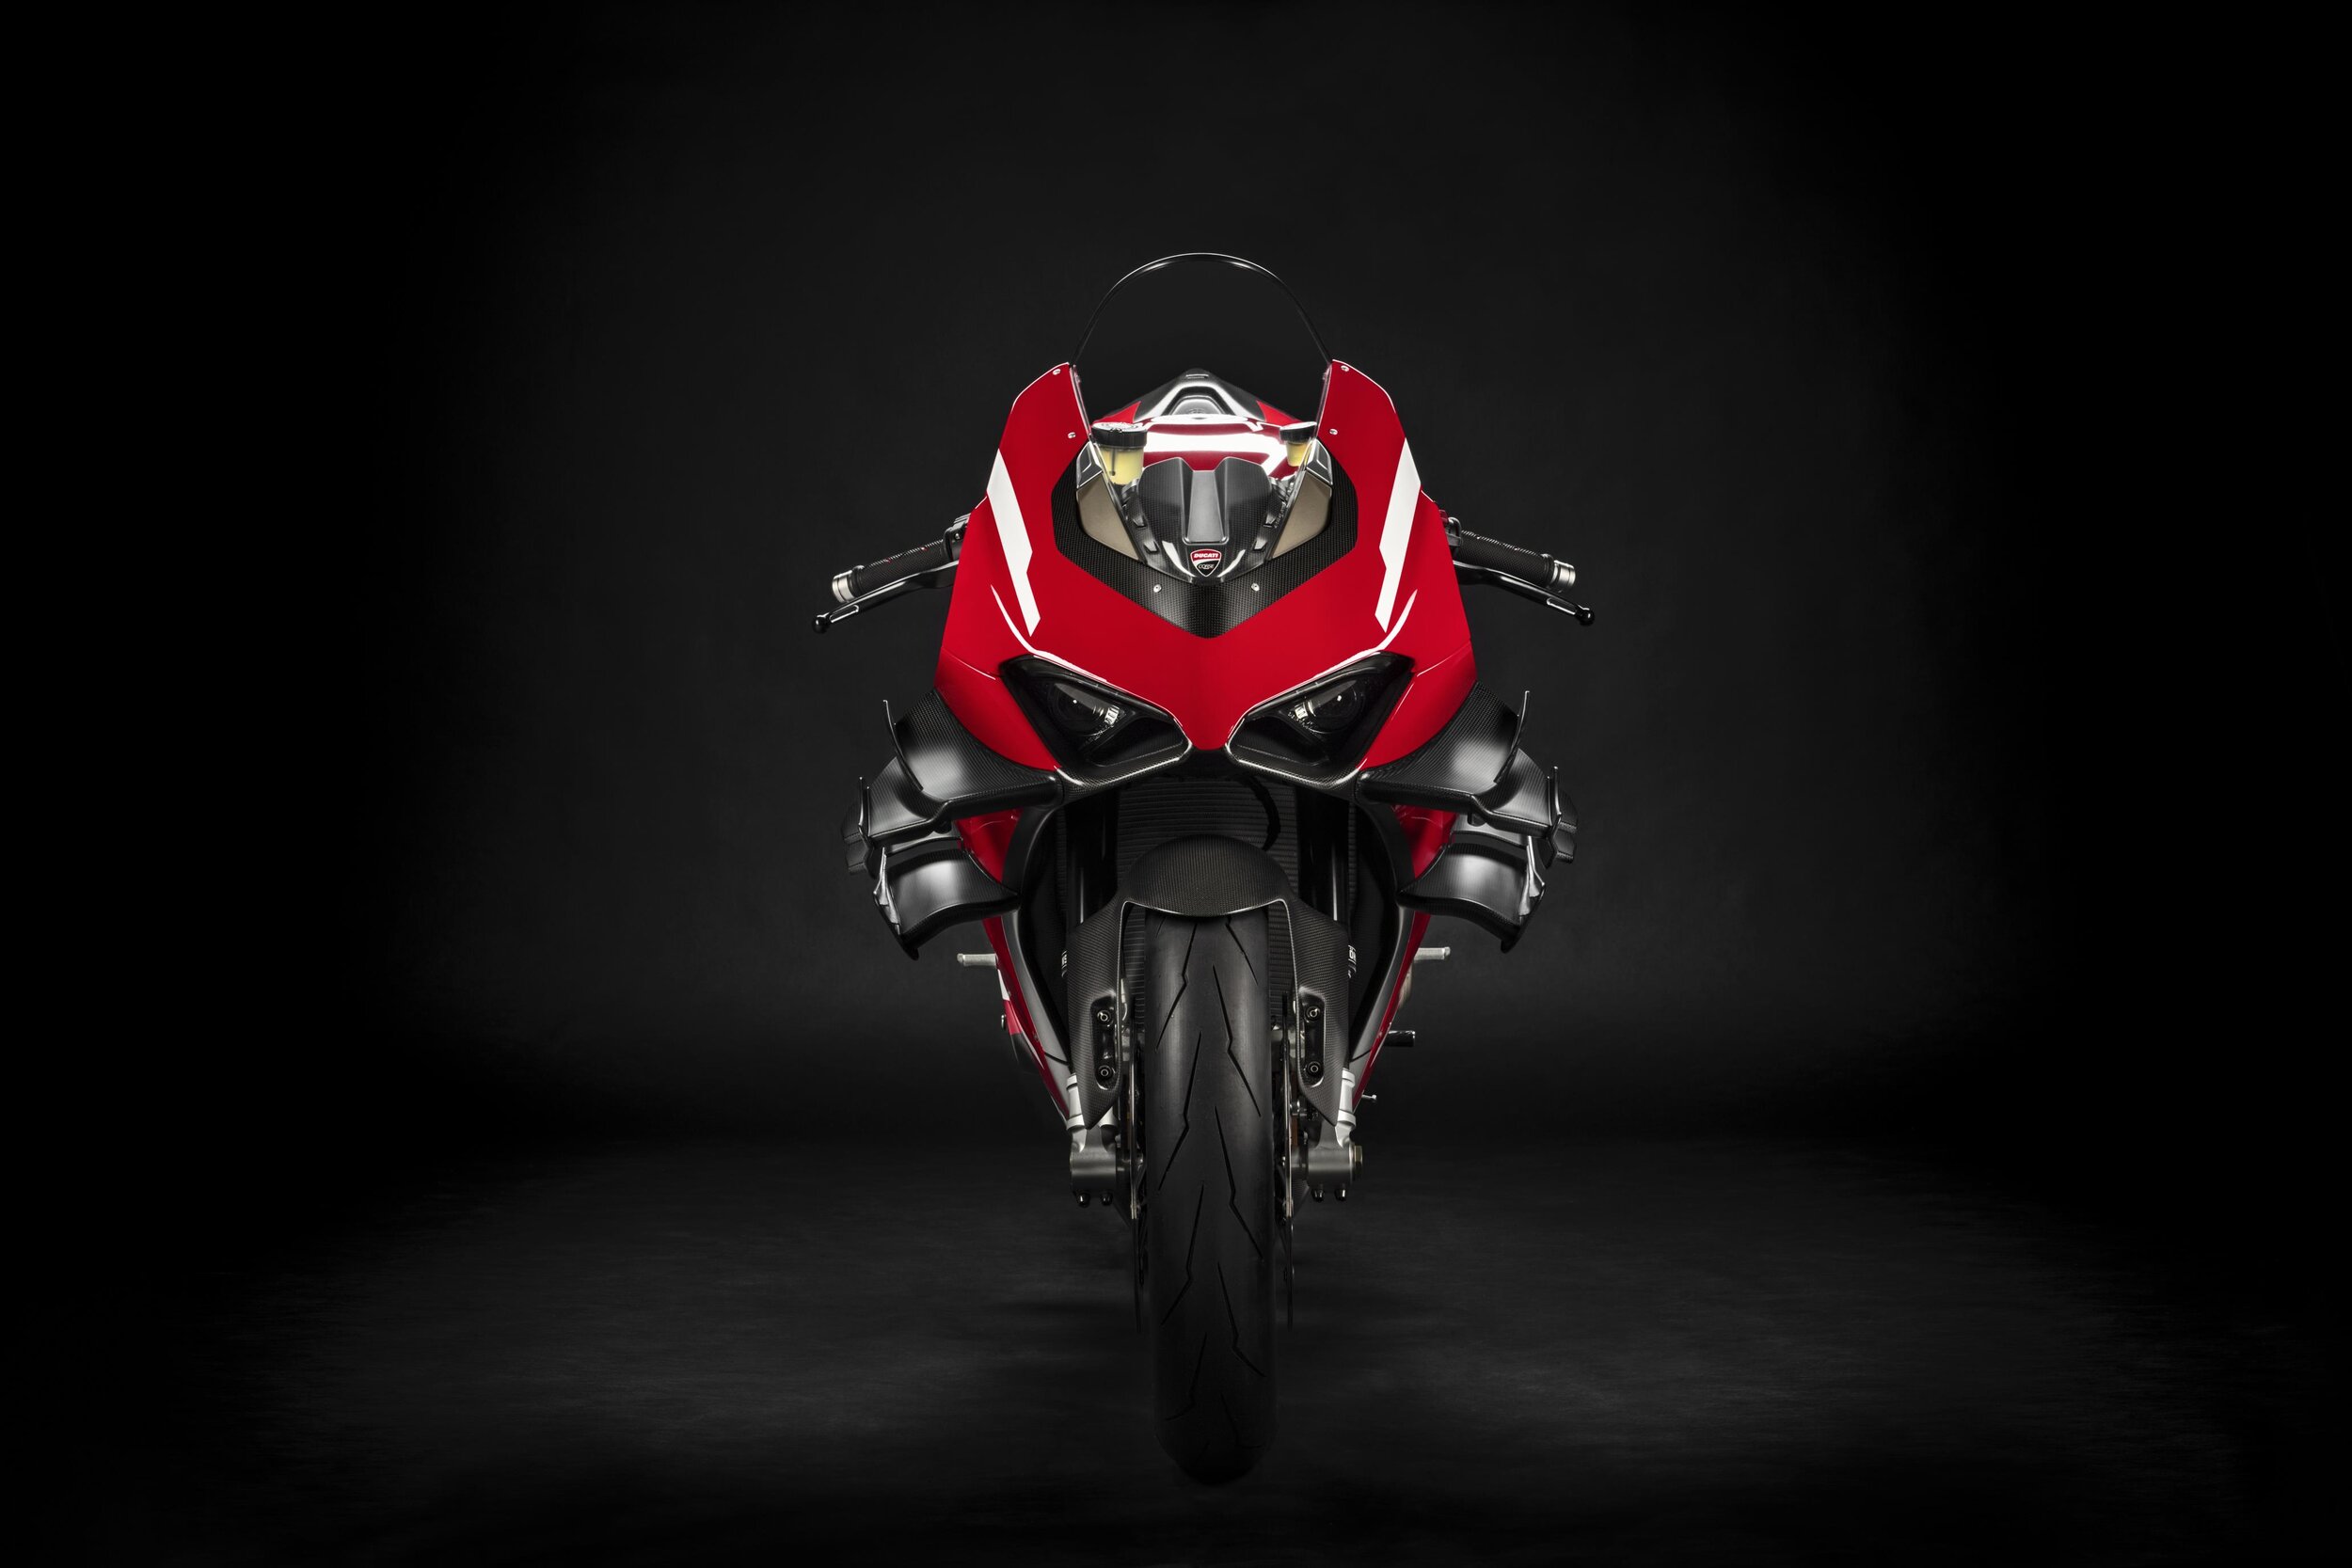 04_Ducati Superleggera V4_UC145952_High.jpg